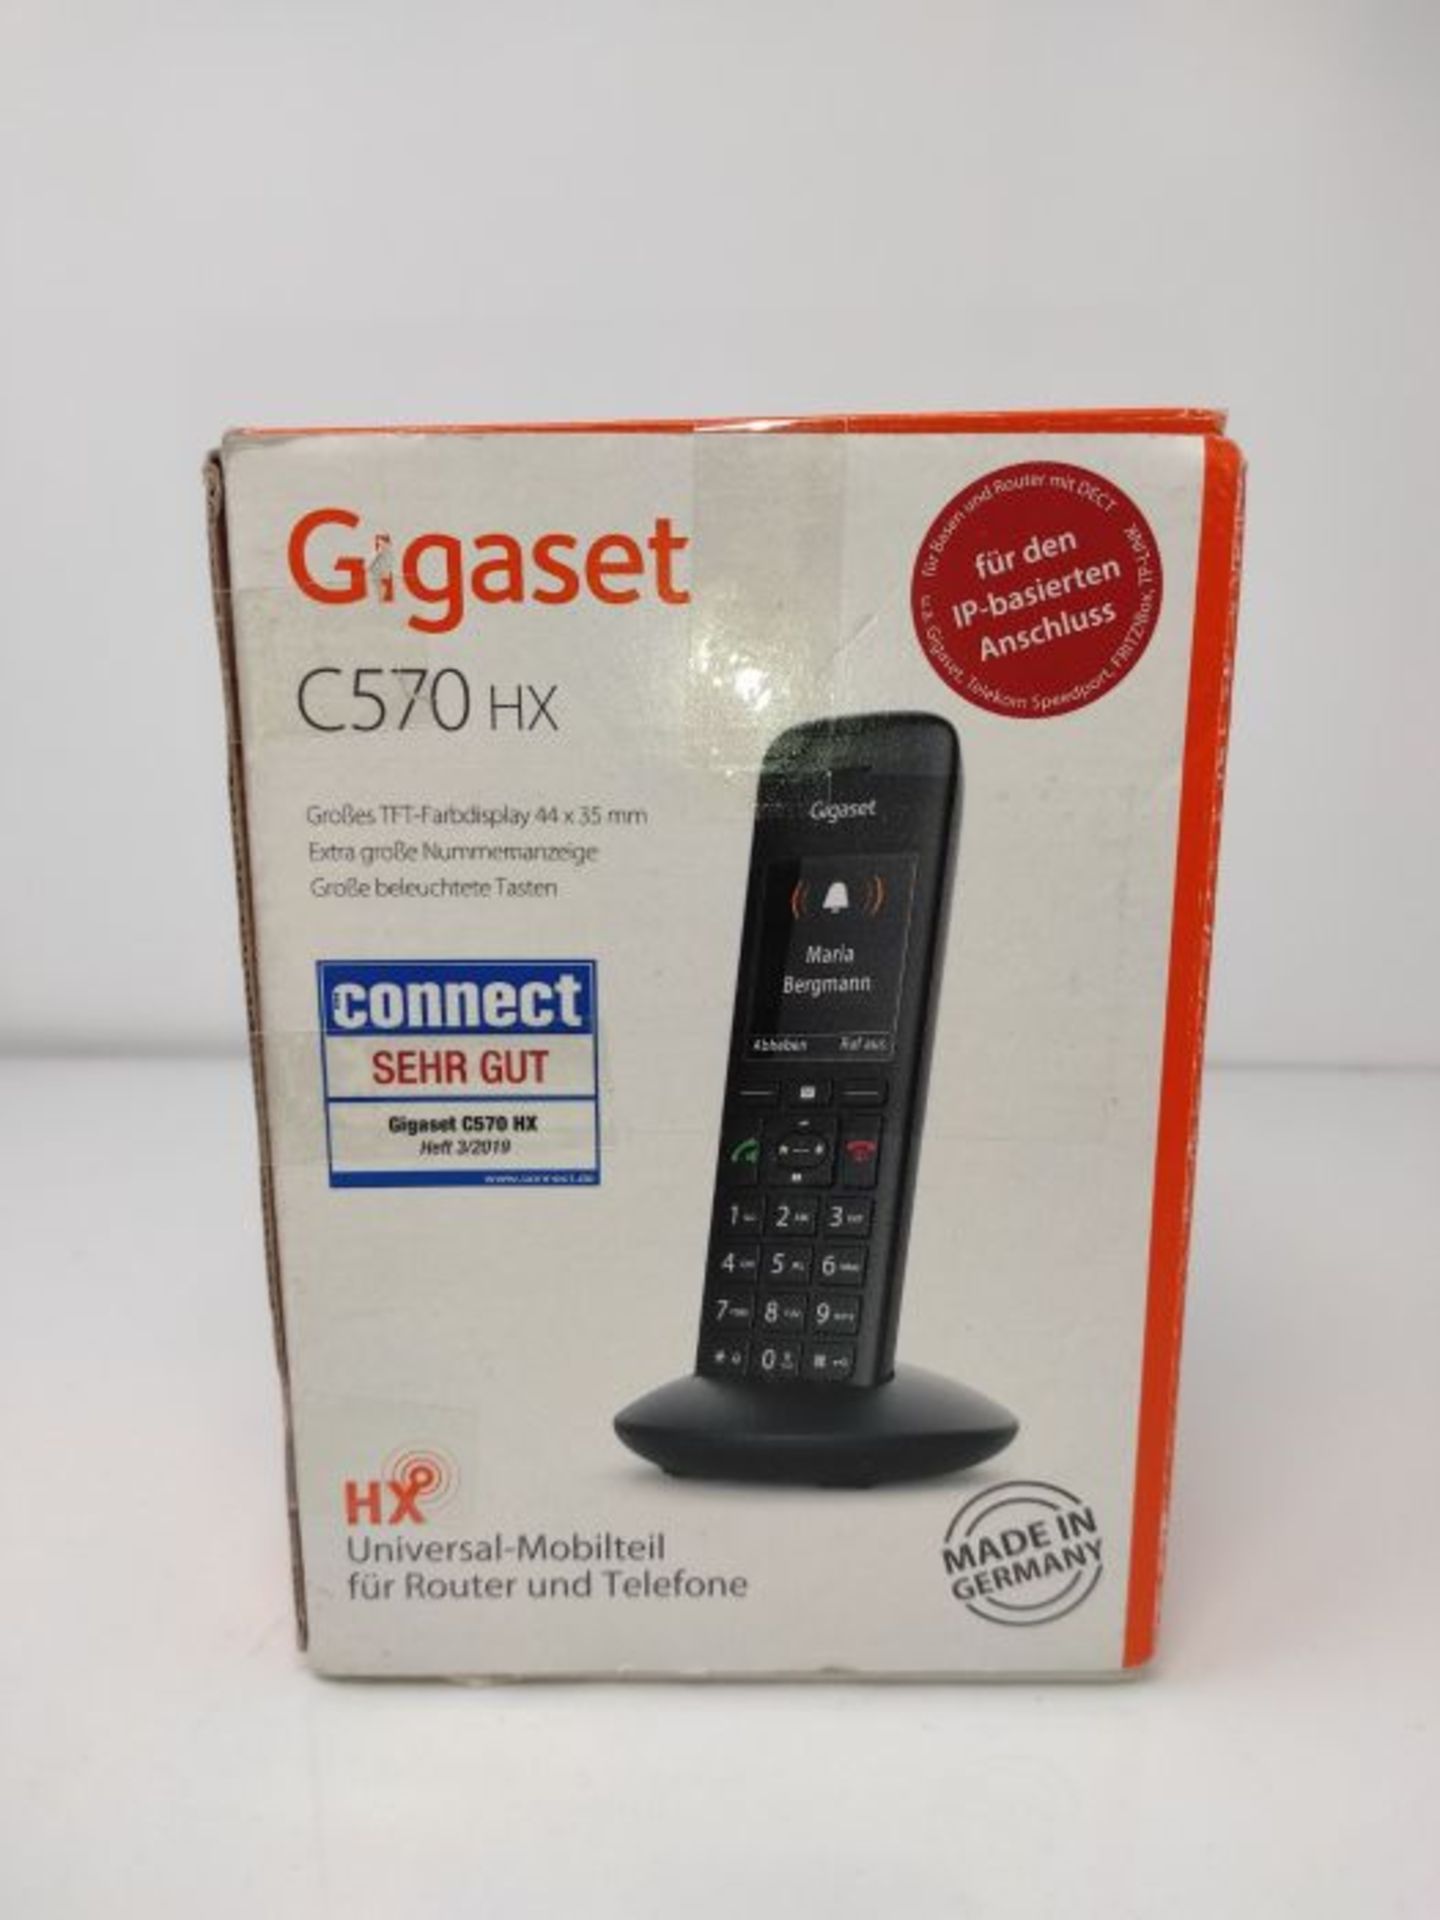 Gigaset C570HX DECT telephone Caller ID Black - Image 2 of 3